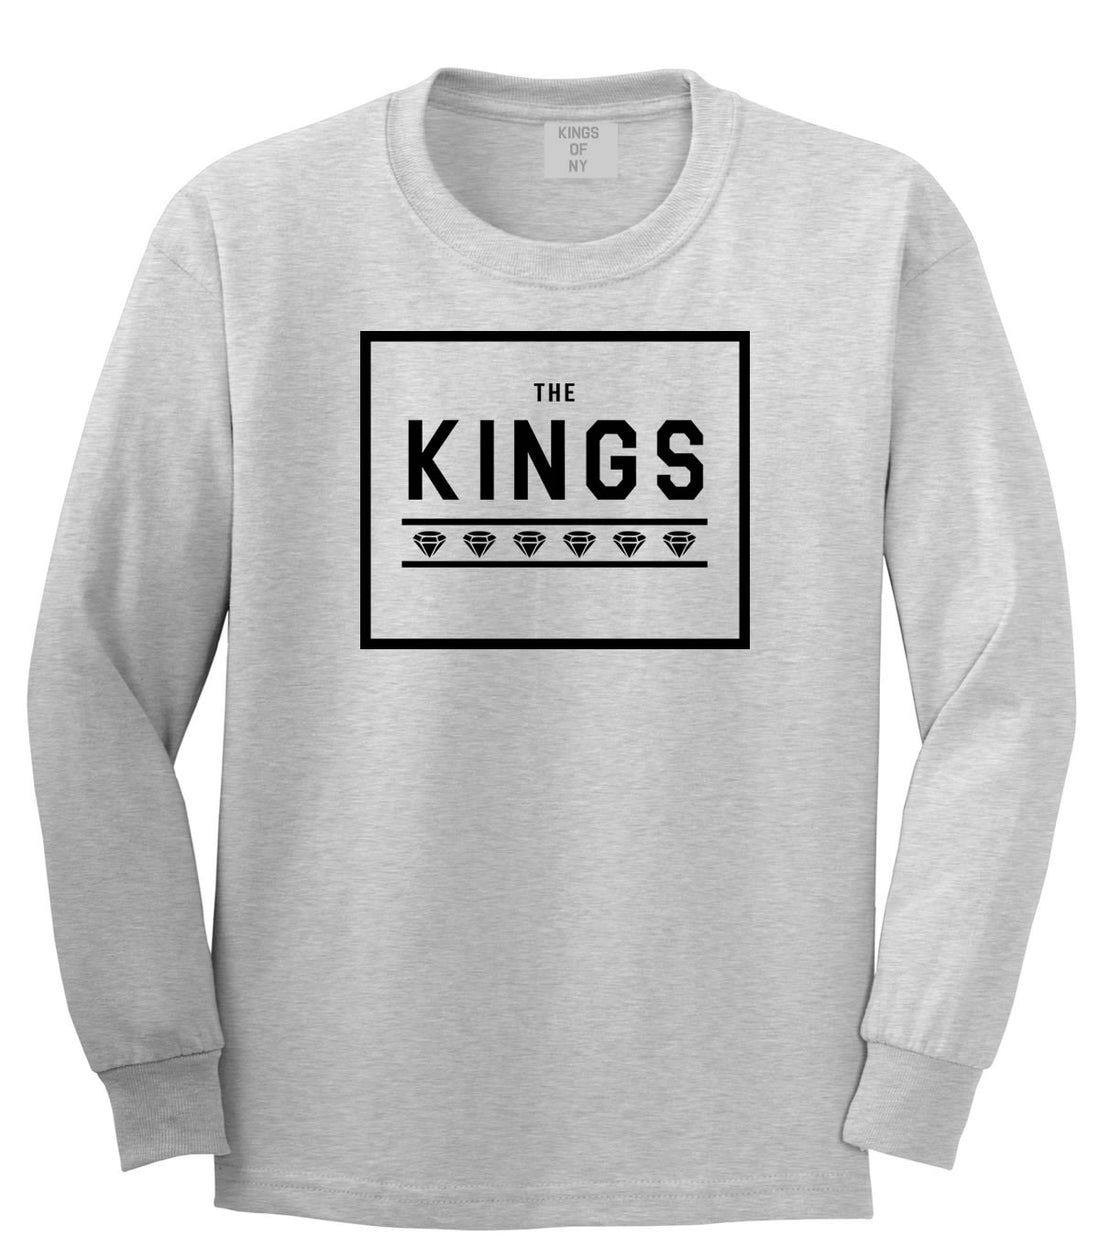 The Kings Diamonds Boys Kids Long Sleeve T-Shirt in Grey by Kings Of NY